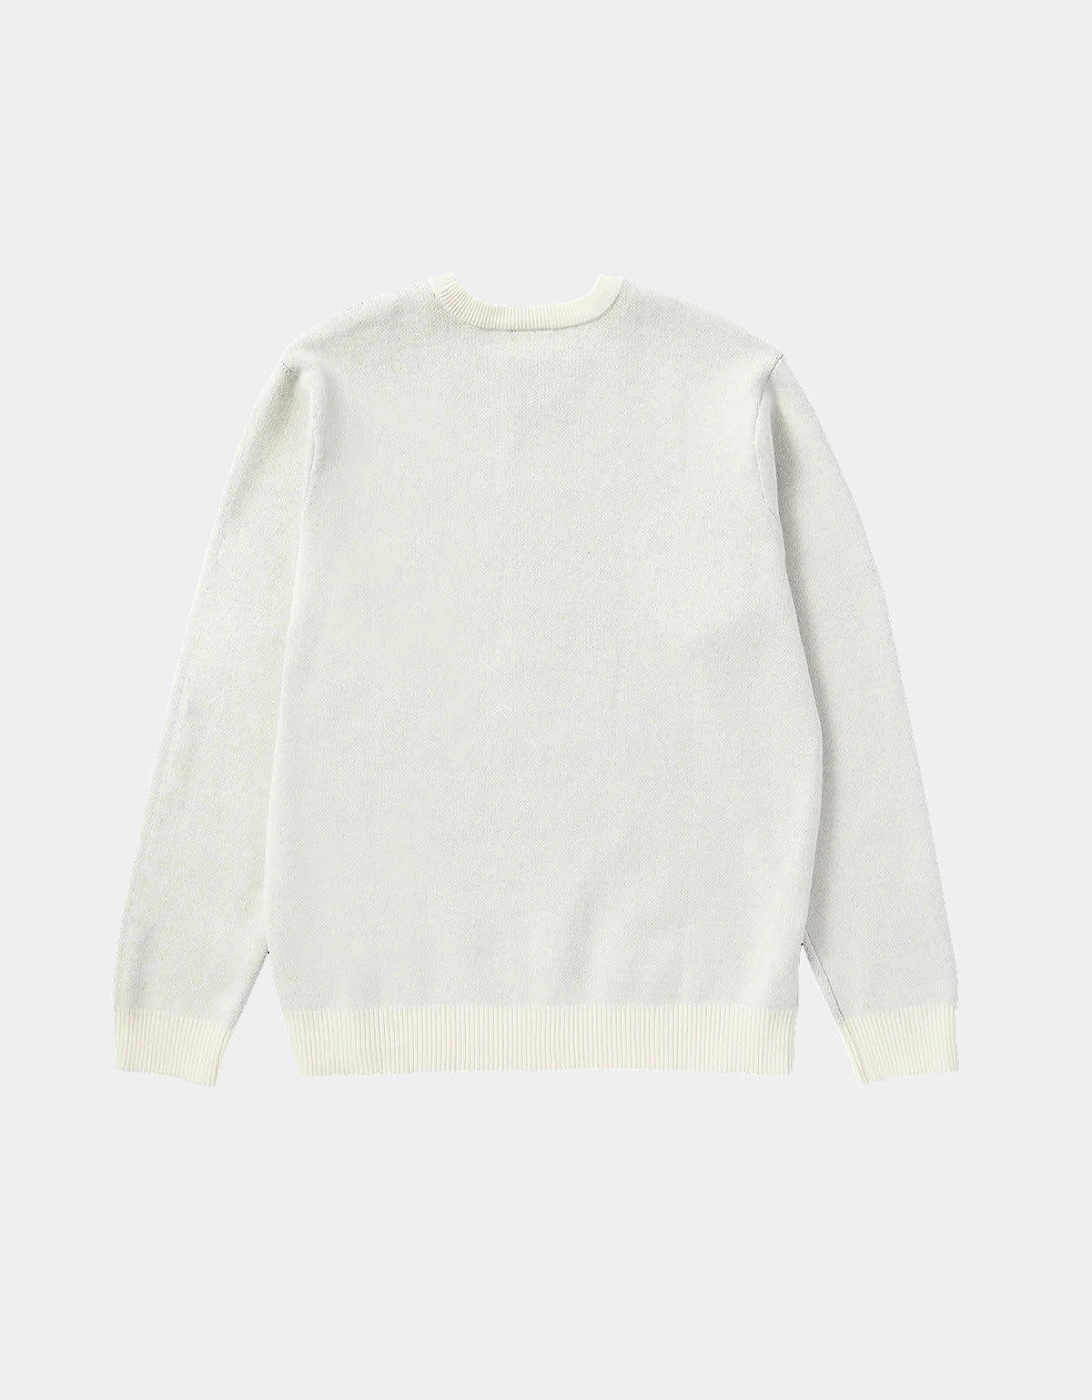 Bad News Crewneck Sweater - White